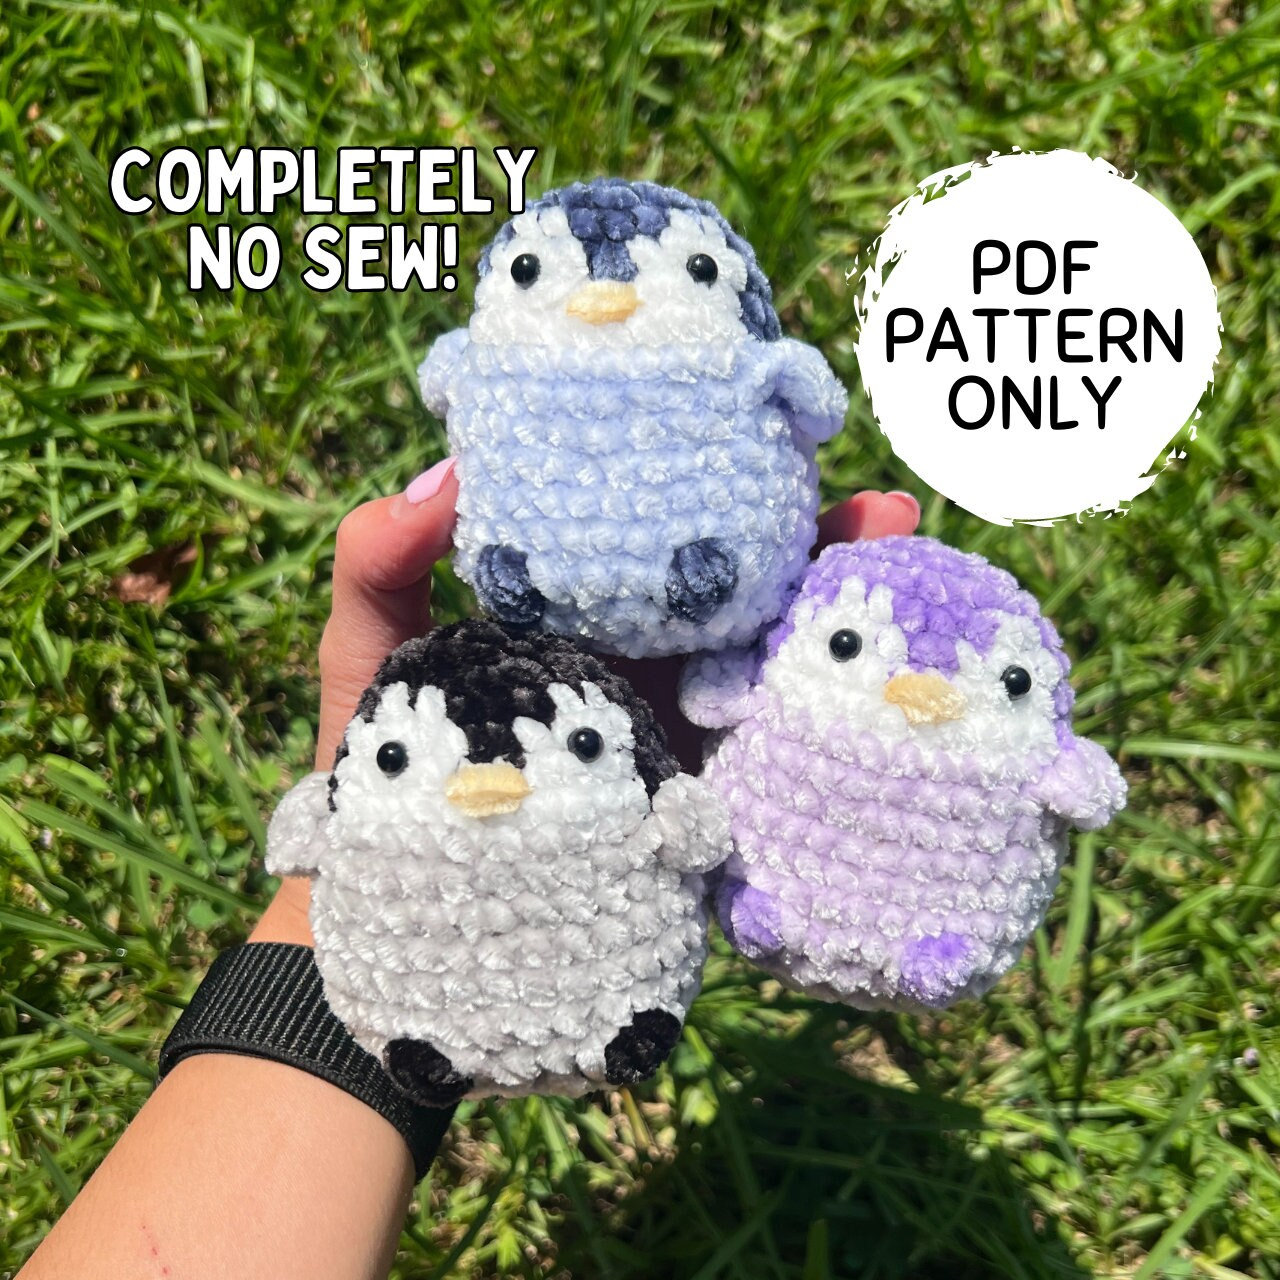 22 Adorable Penguin Crochet Patterns - Crochet Life